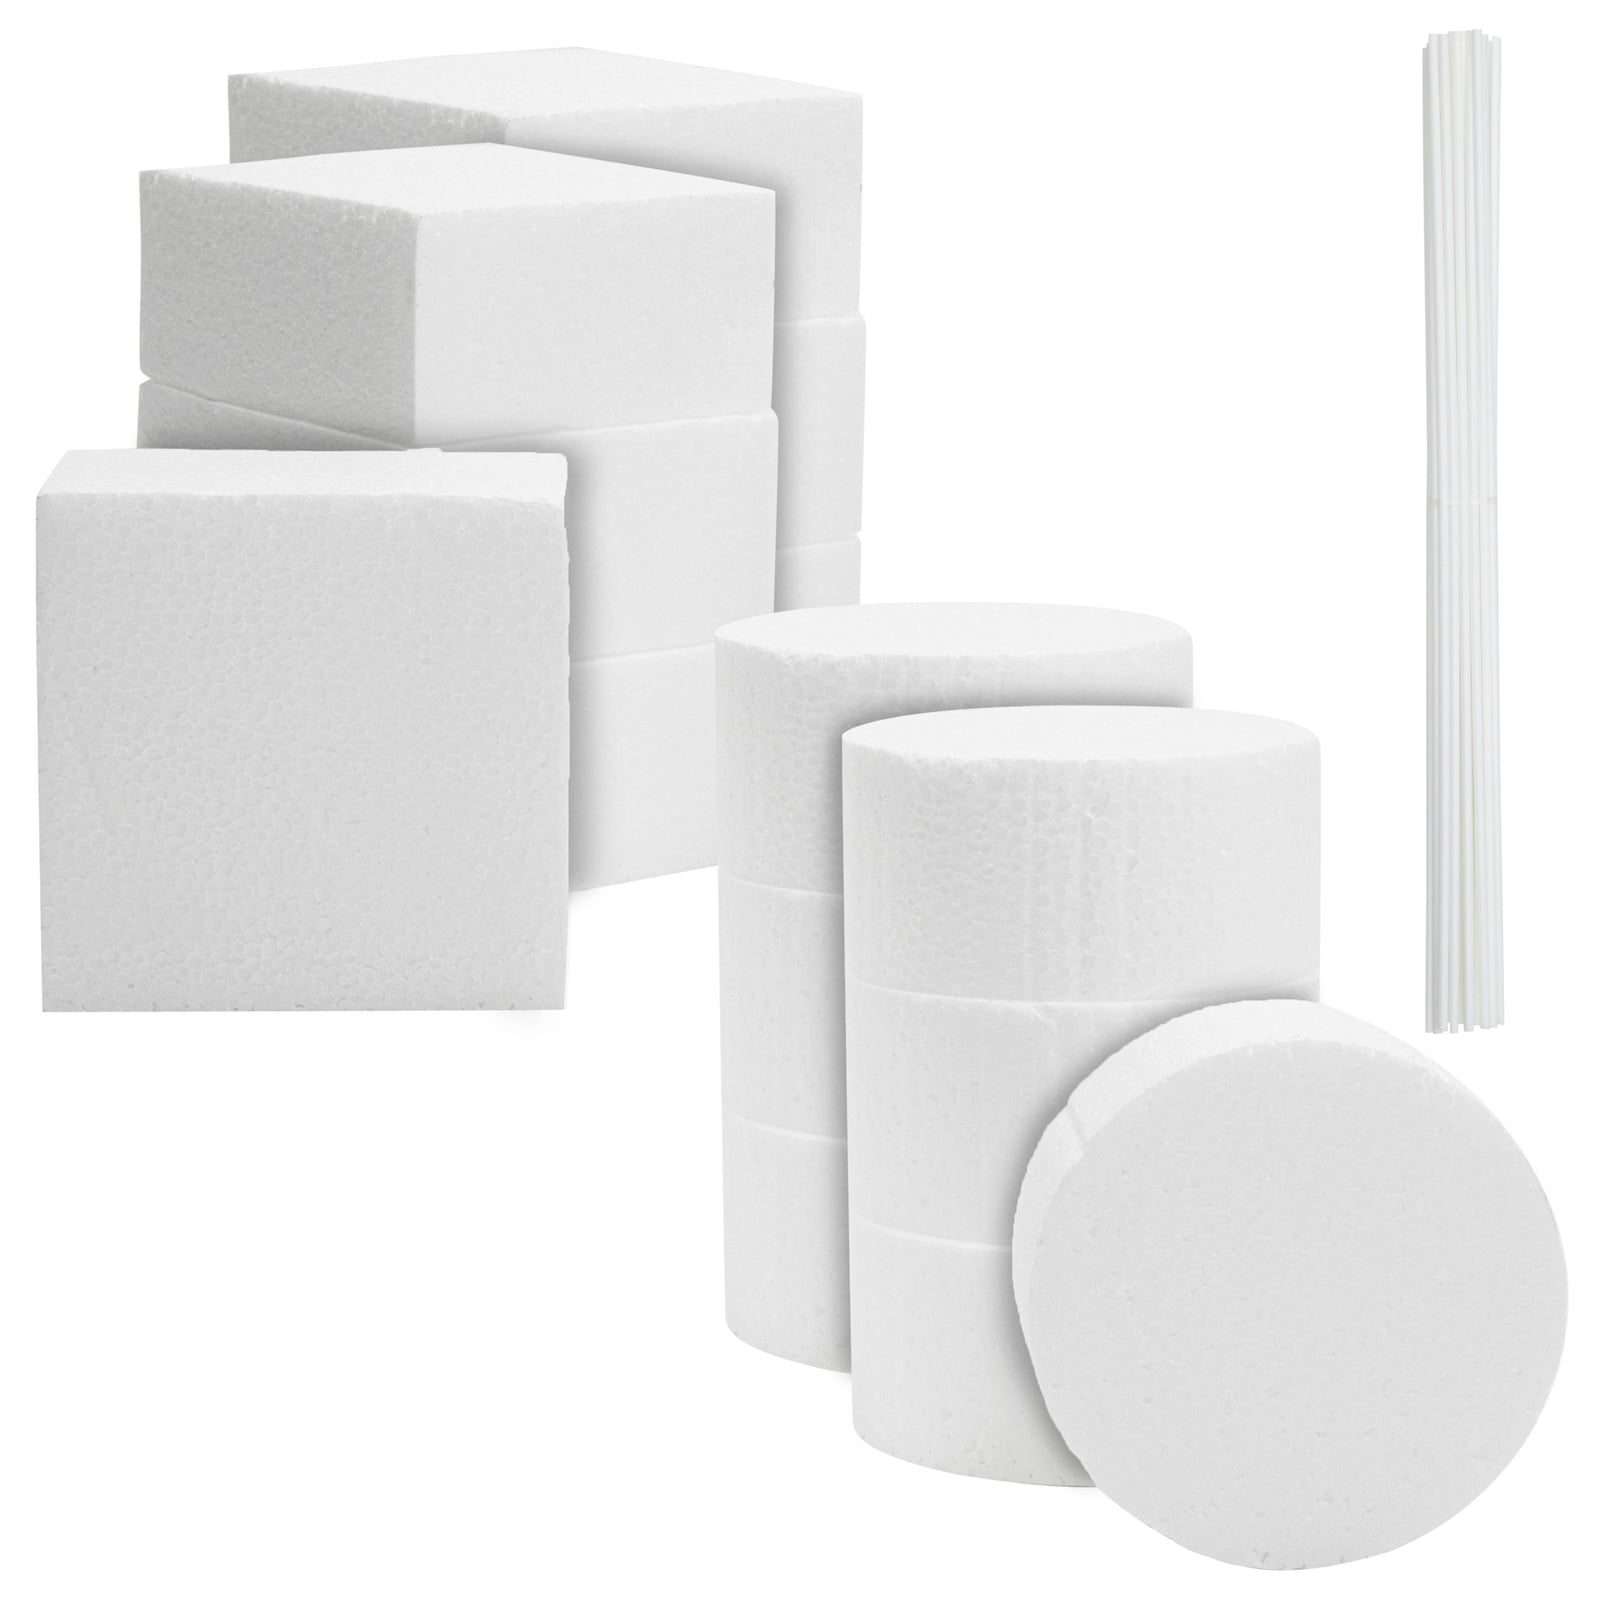 White Non-adhesive EVA Foam Cube High Density Sponge Pads For Art Craft DIY 